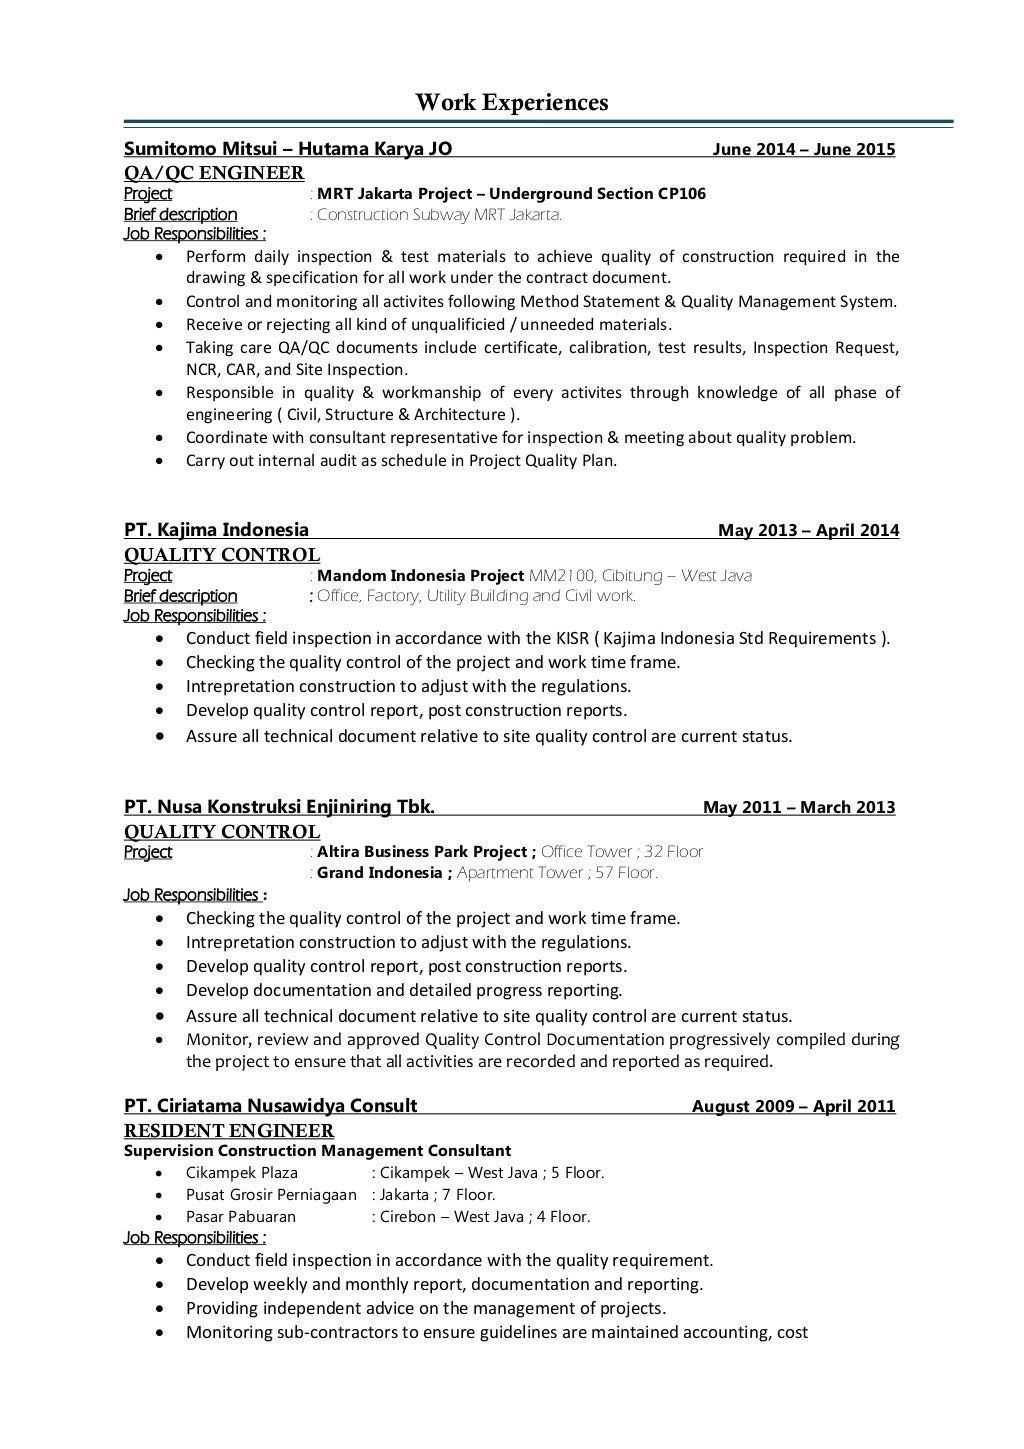 resume format for qa qc engineer